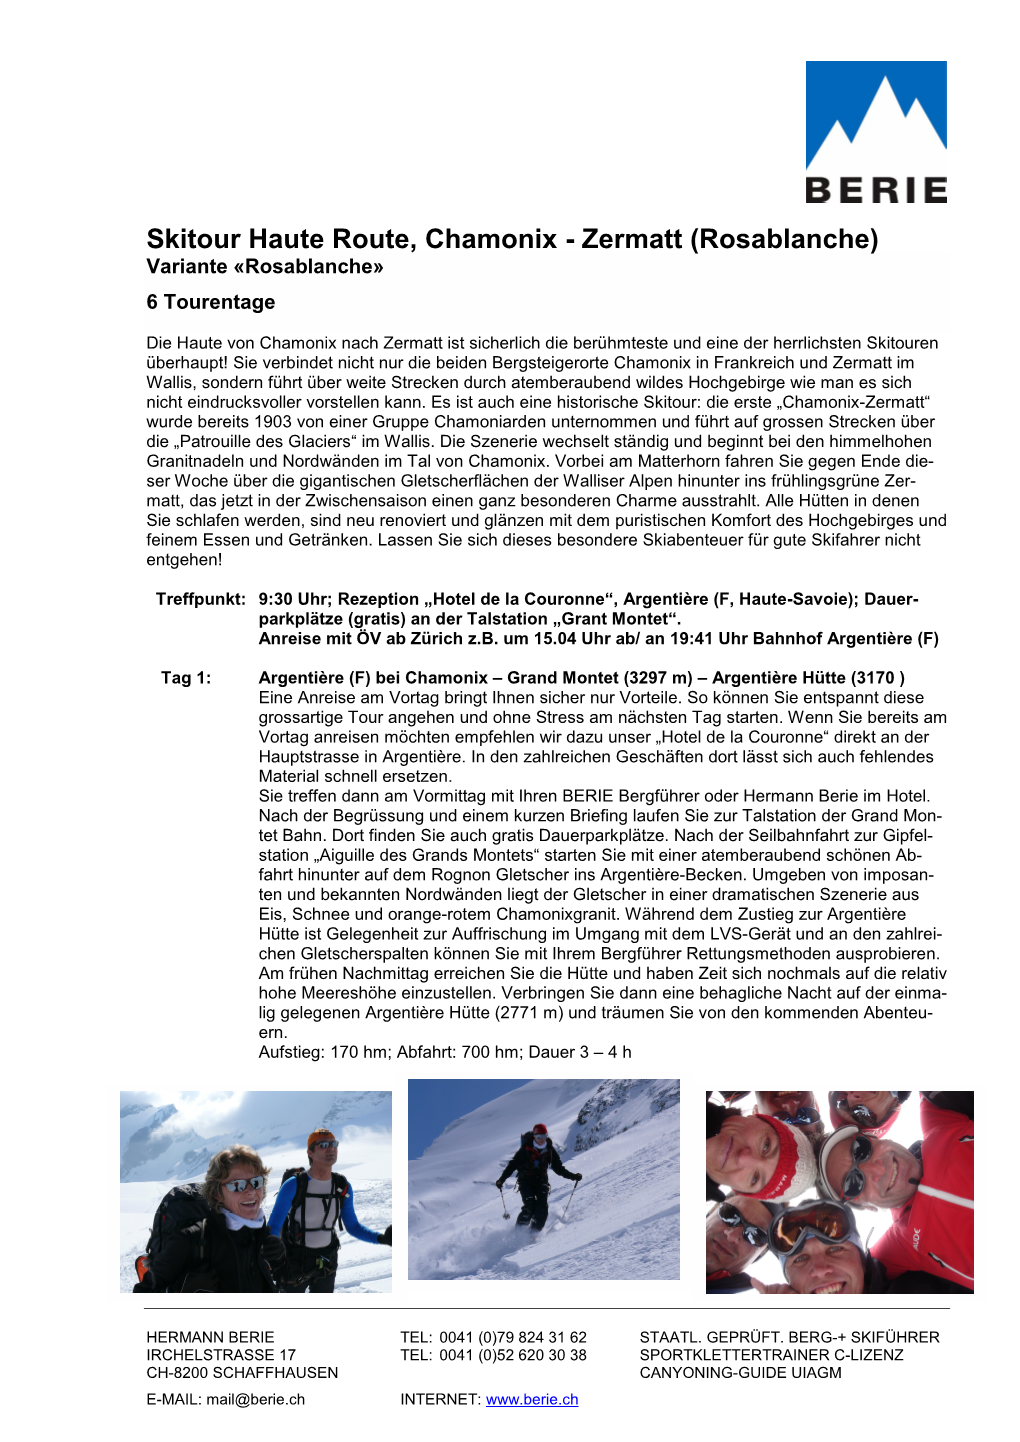 Skitour Haute Route, Chamonix - Zermatt (Rosablanche) Variante «Rosablanche» 6 Tourentage